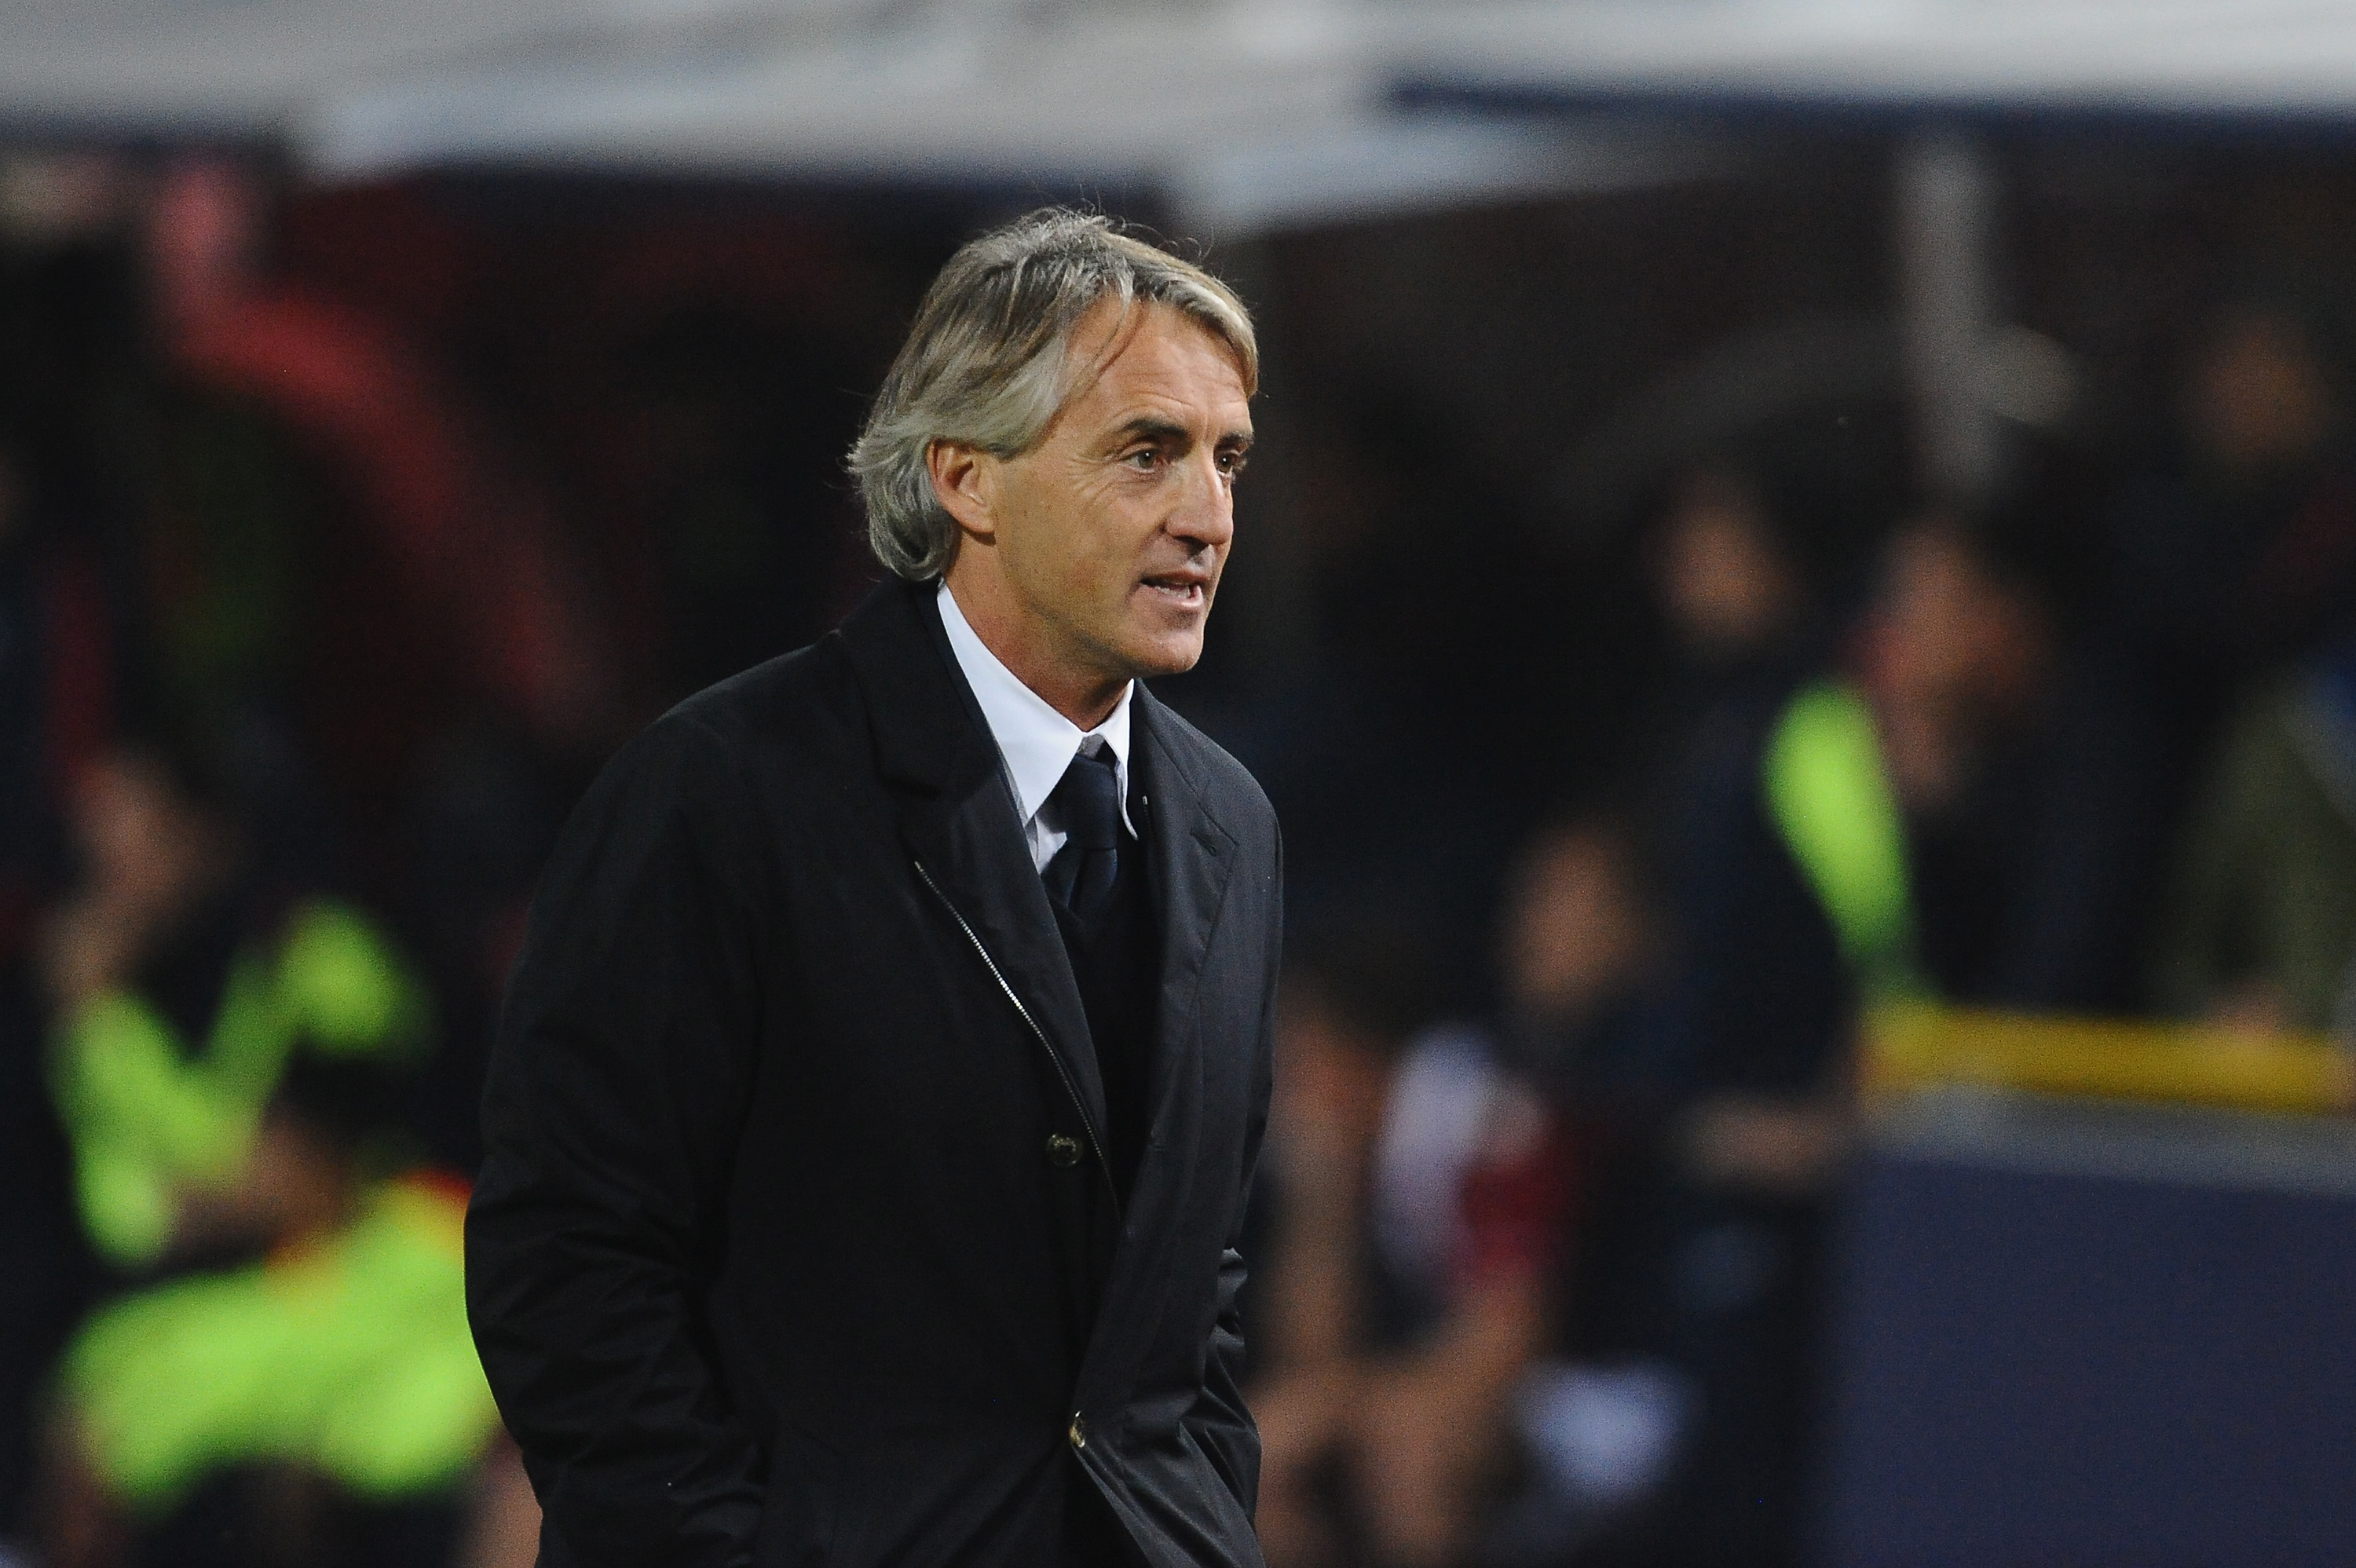 Mancini: “I admire Ljajic, but at times he makes me angry”